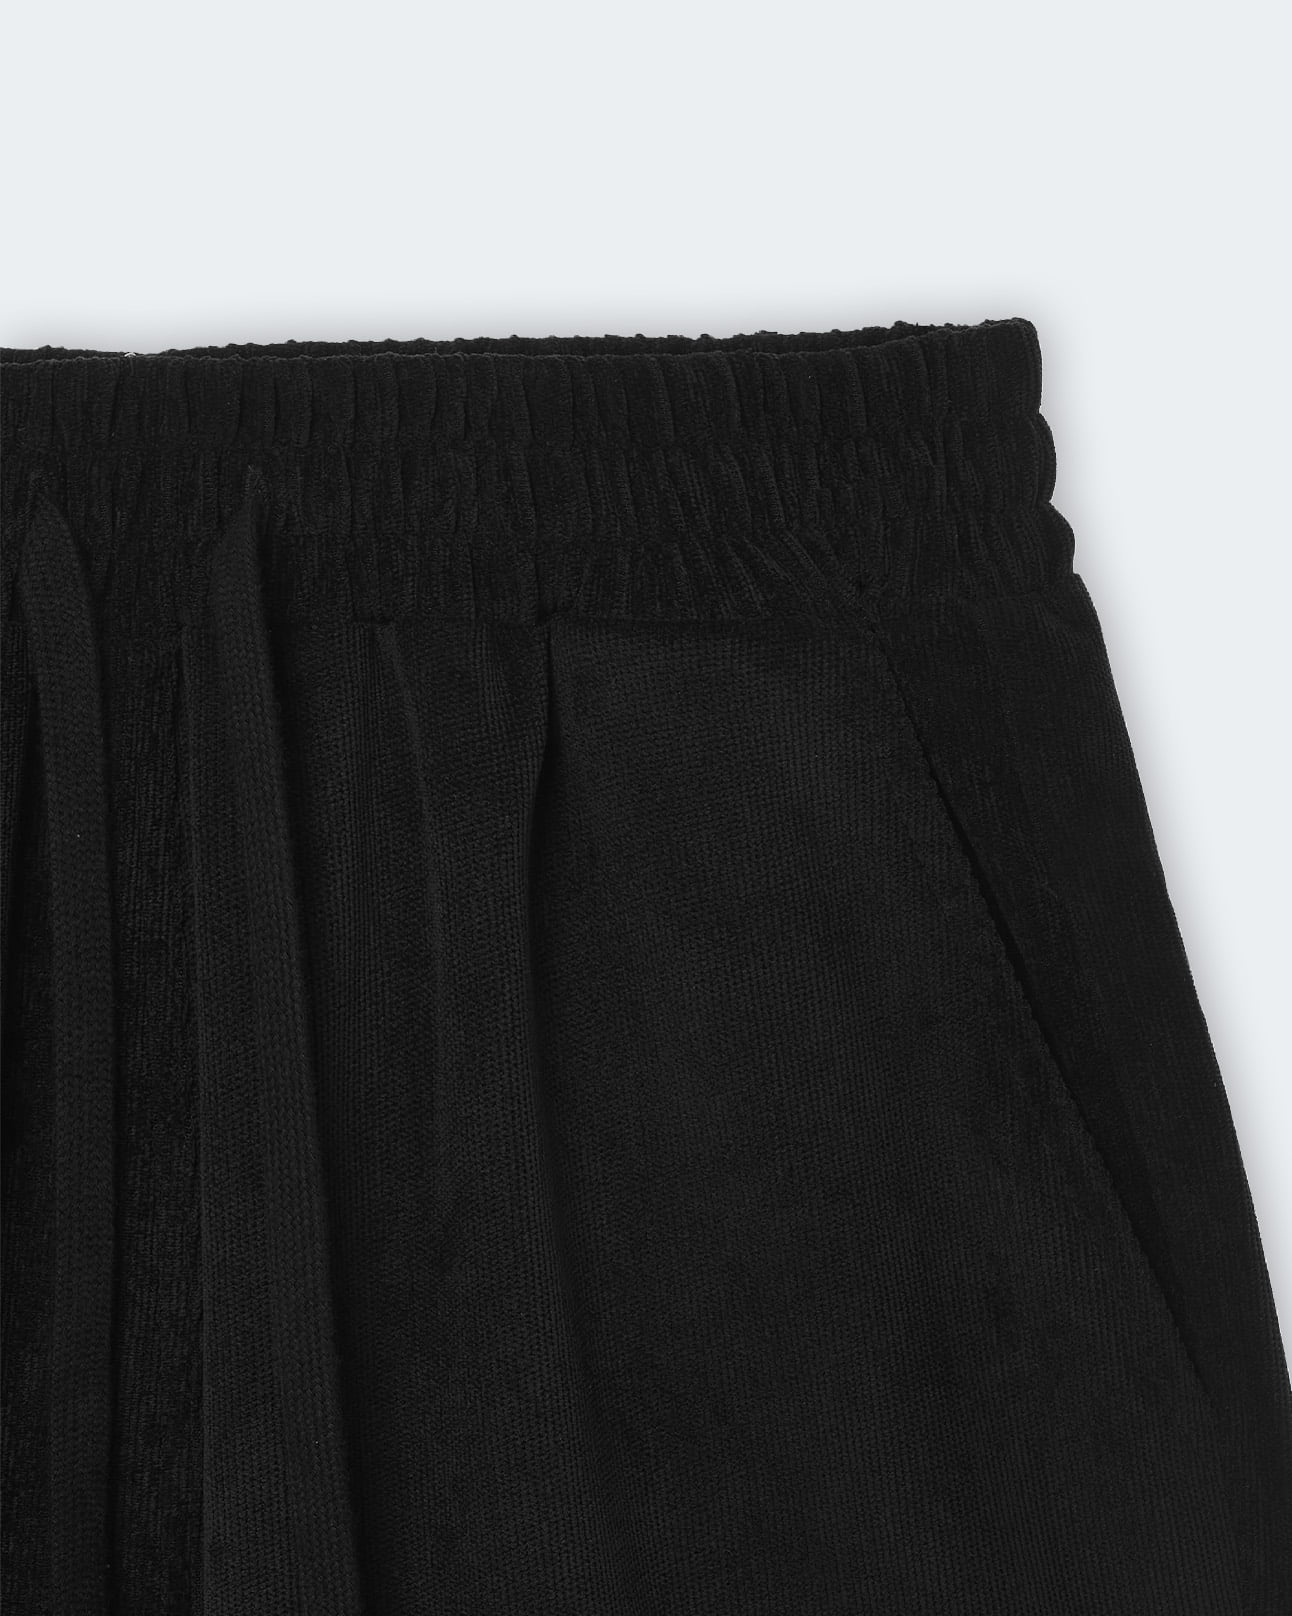 Black Solid Corduroy Pants 19